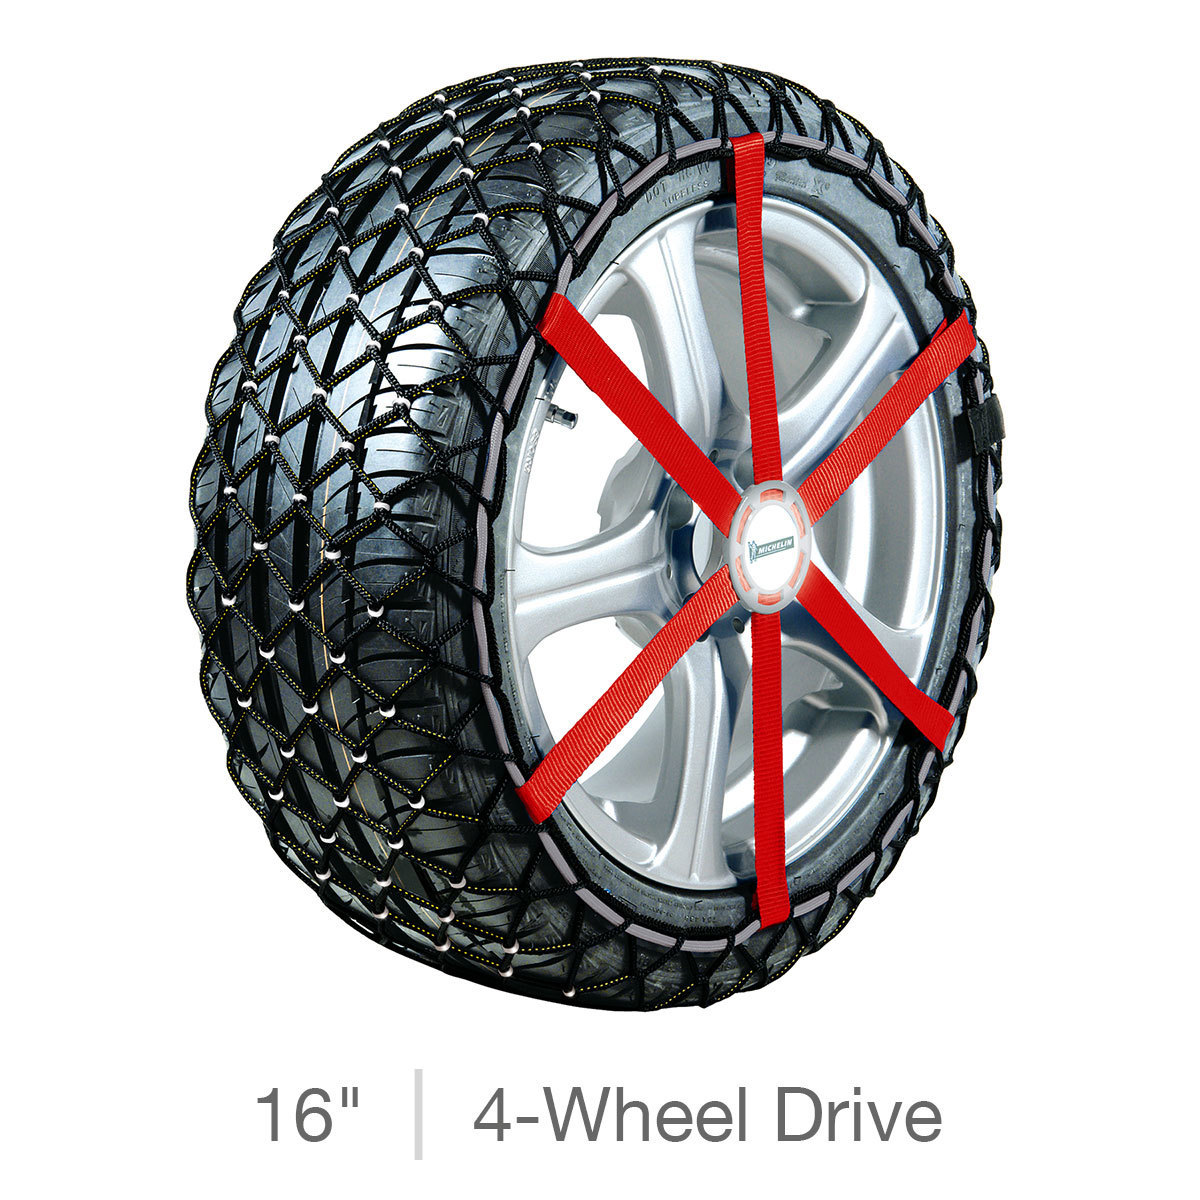 Michelin Snow Chains for 16" Wheels 4-Wheel Drive Cars